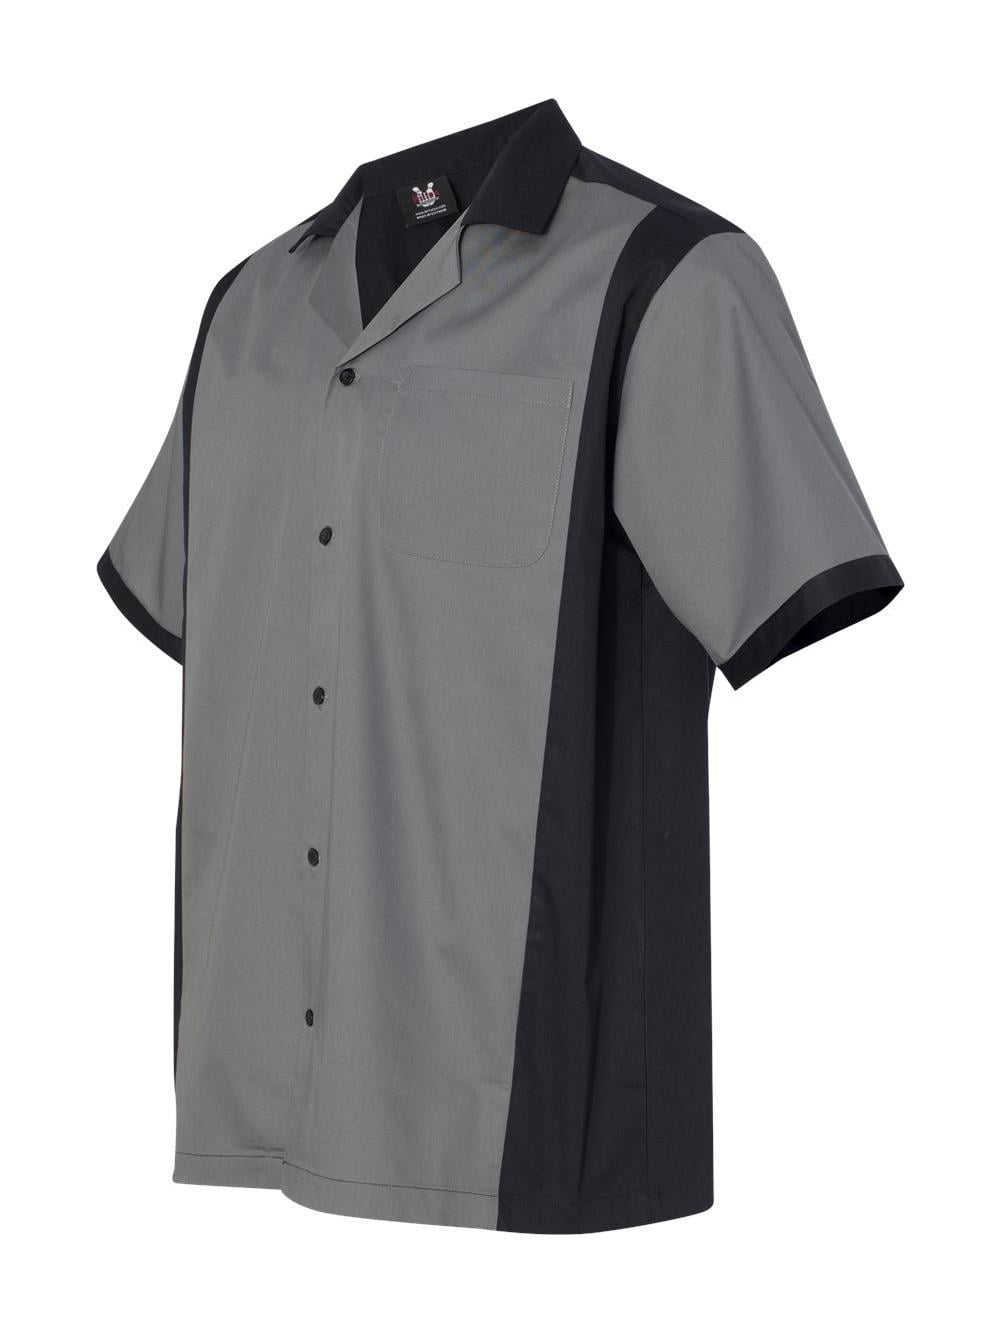 Cruiser Bowling Shirt - HP2243 - Walmart.com